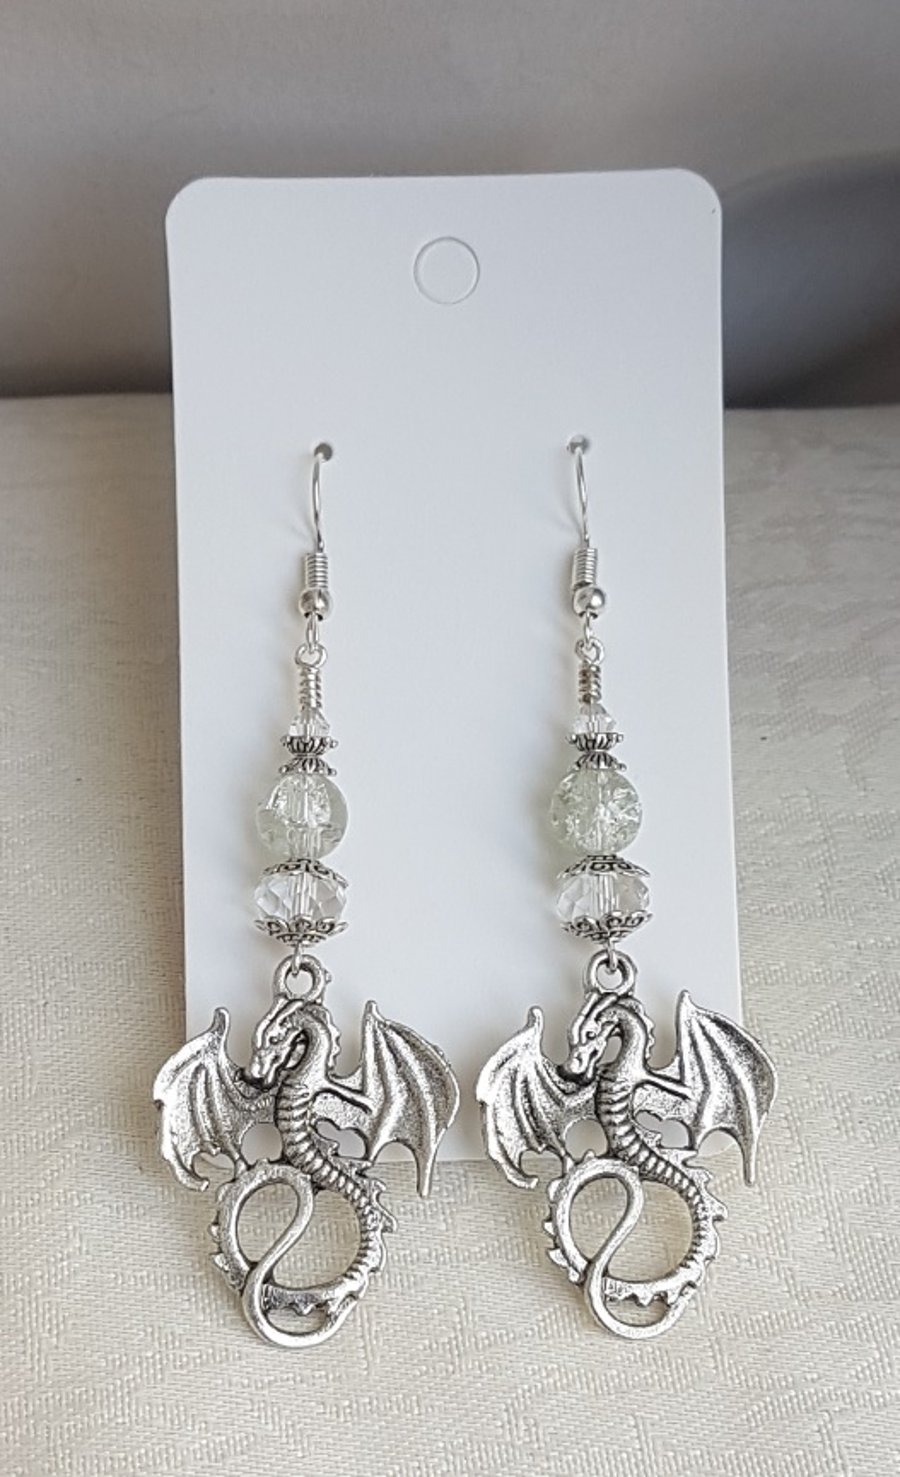 Elemental Dragon Earrings - Air - Aeris Draco